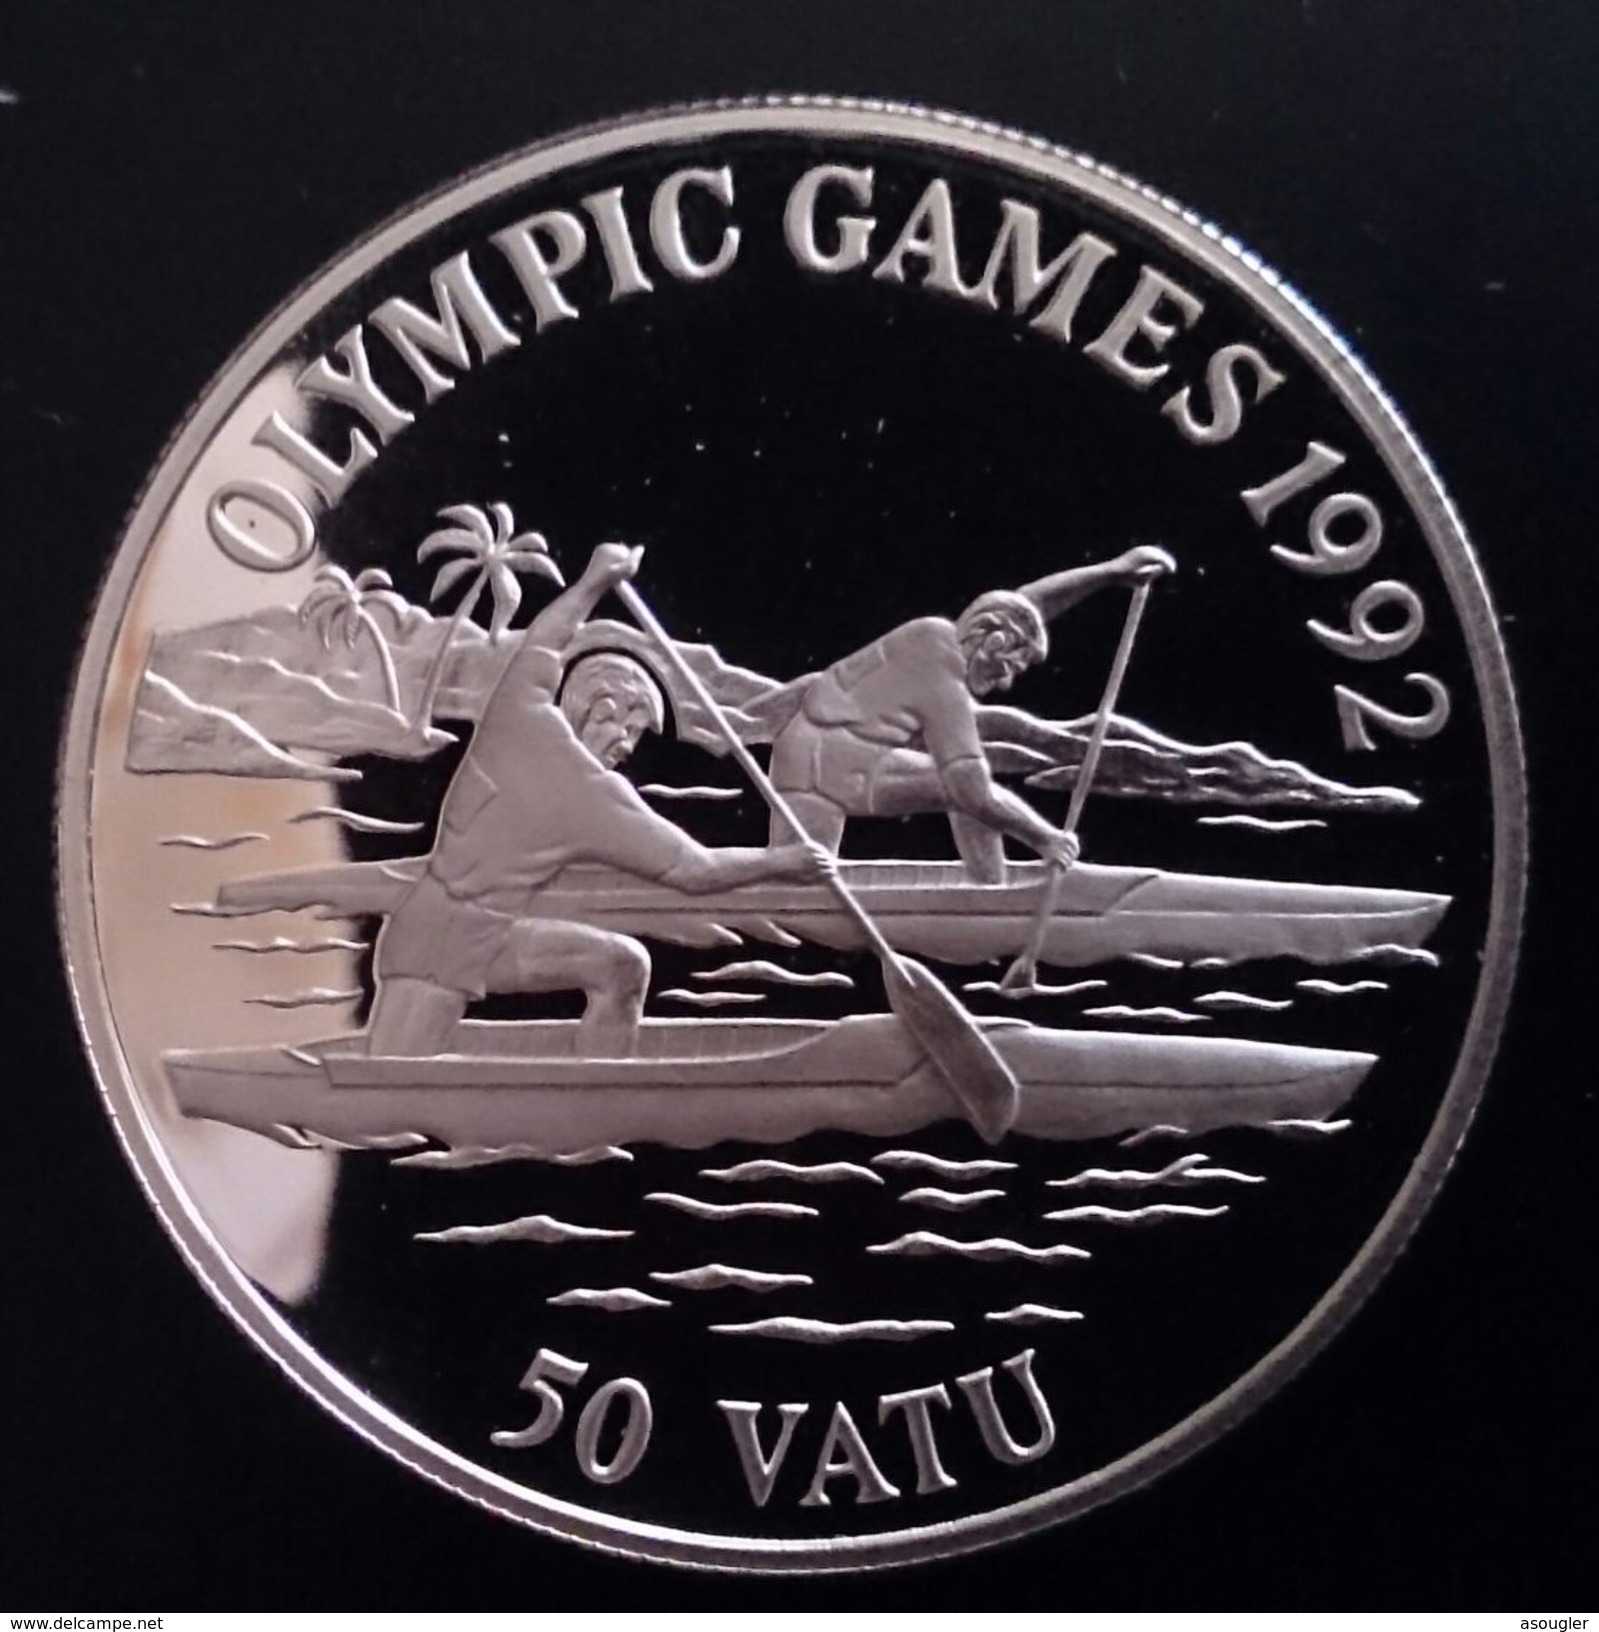 VANUATU 50 VATU 1992 SILVER PROOF "Olympics Games 1992" Free Shipping Via Registered Air Mail - Vanuatu